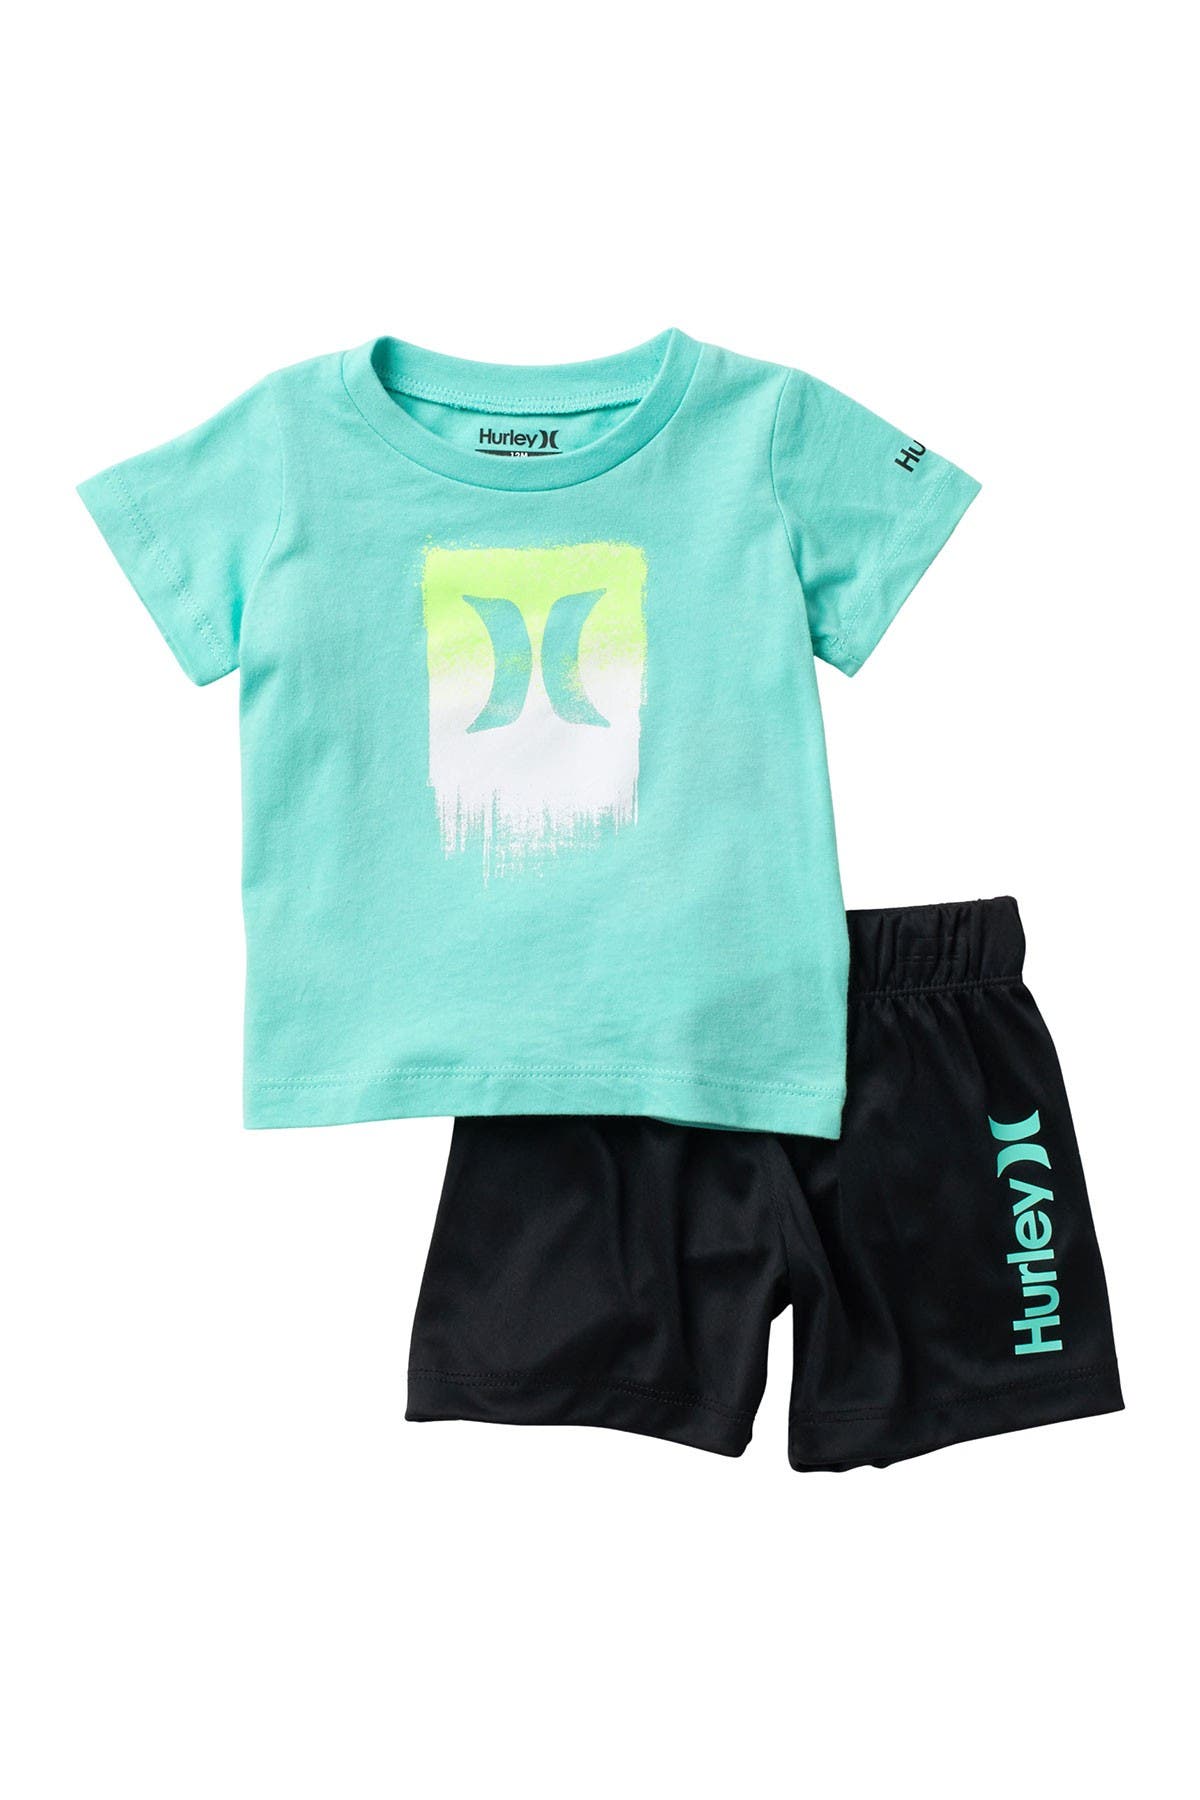 Hurley Dri-fit Logo T-shirt & Shorts Set In 023-bla-gr